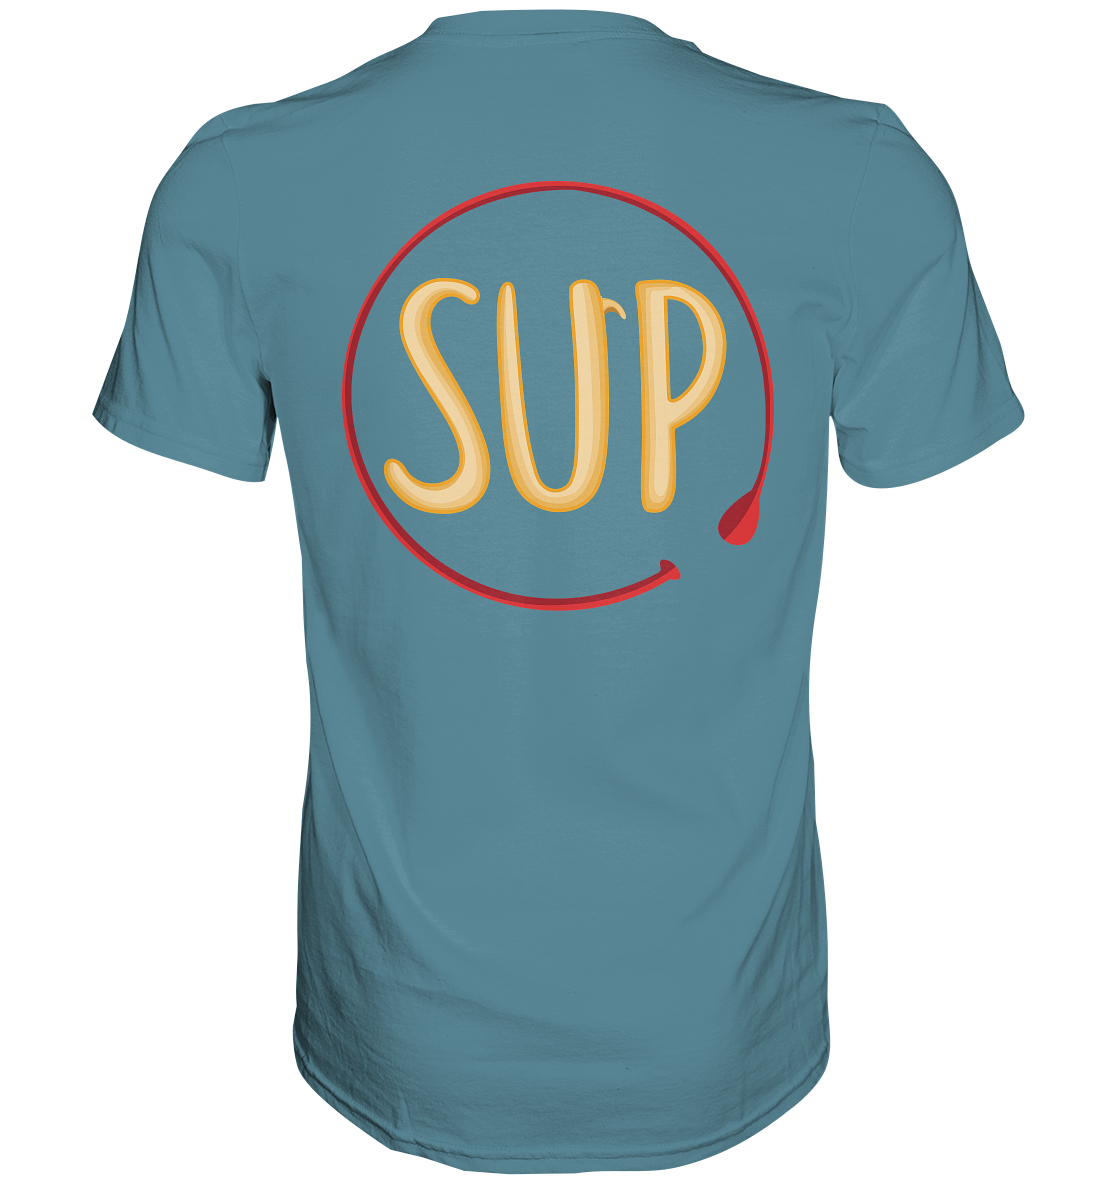 SUP & Paddle - Premium Shirt